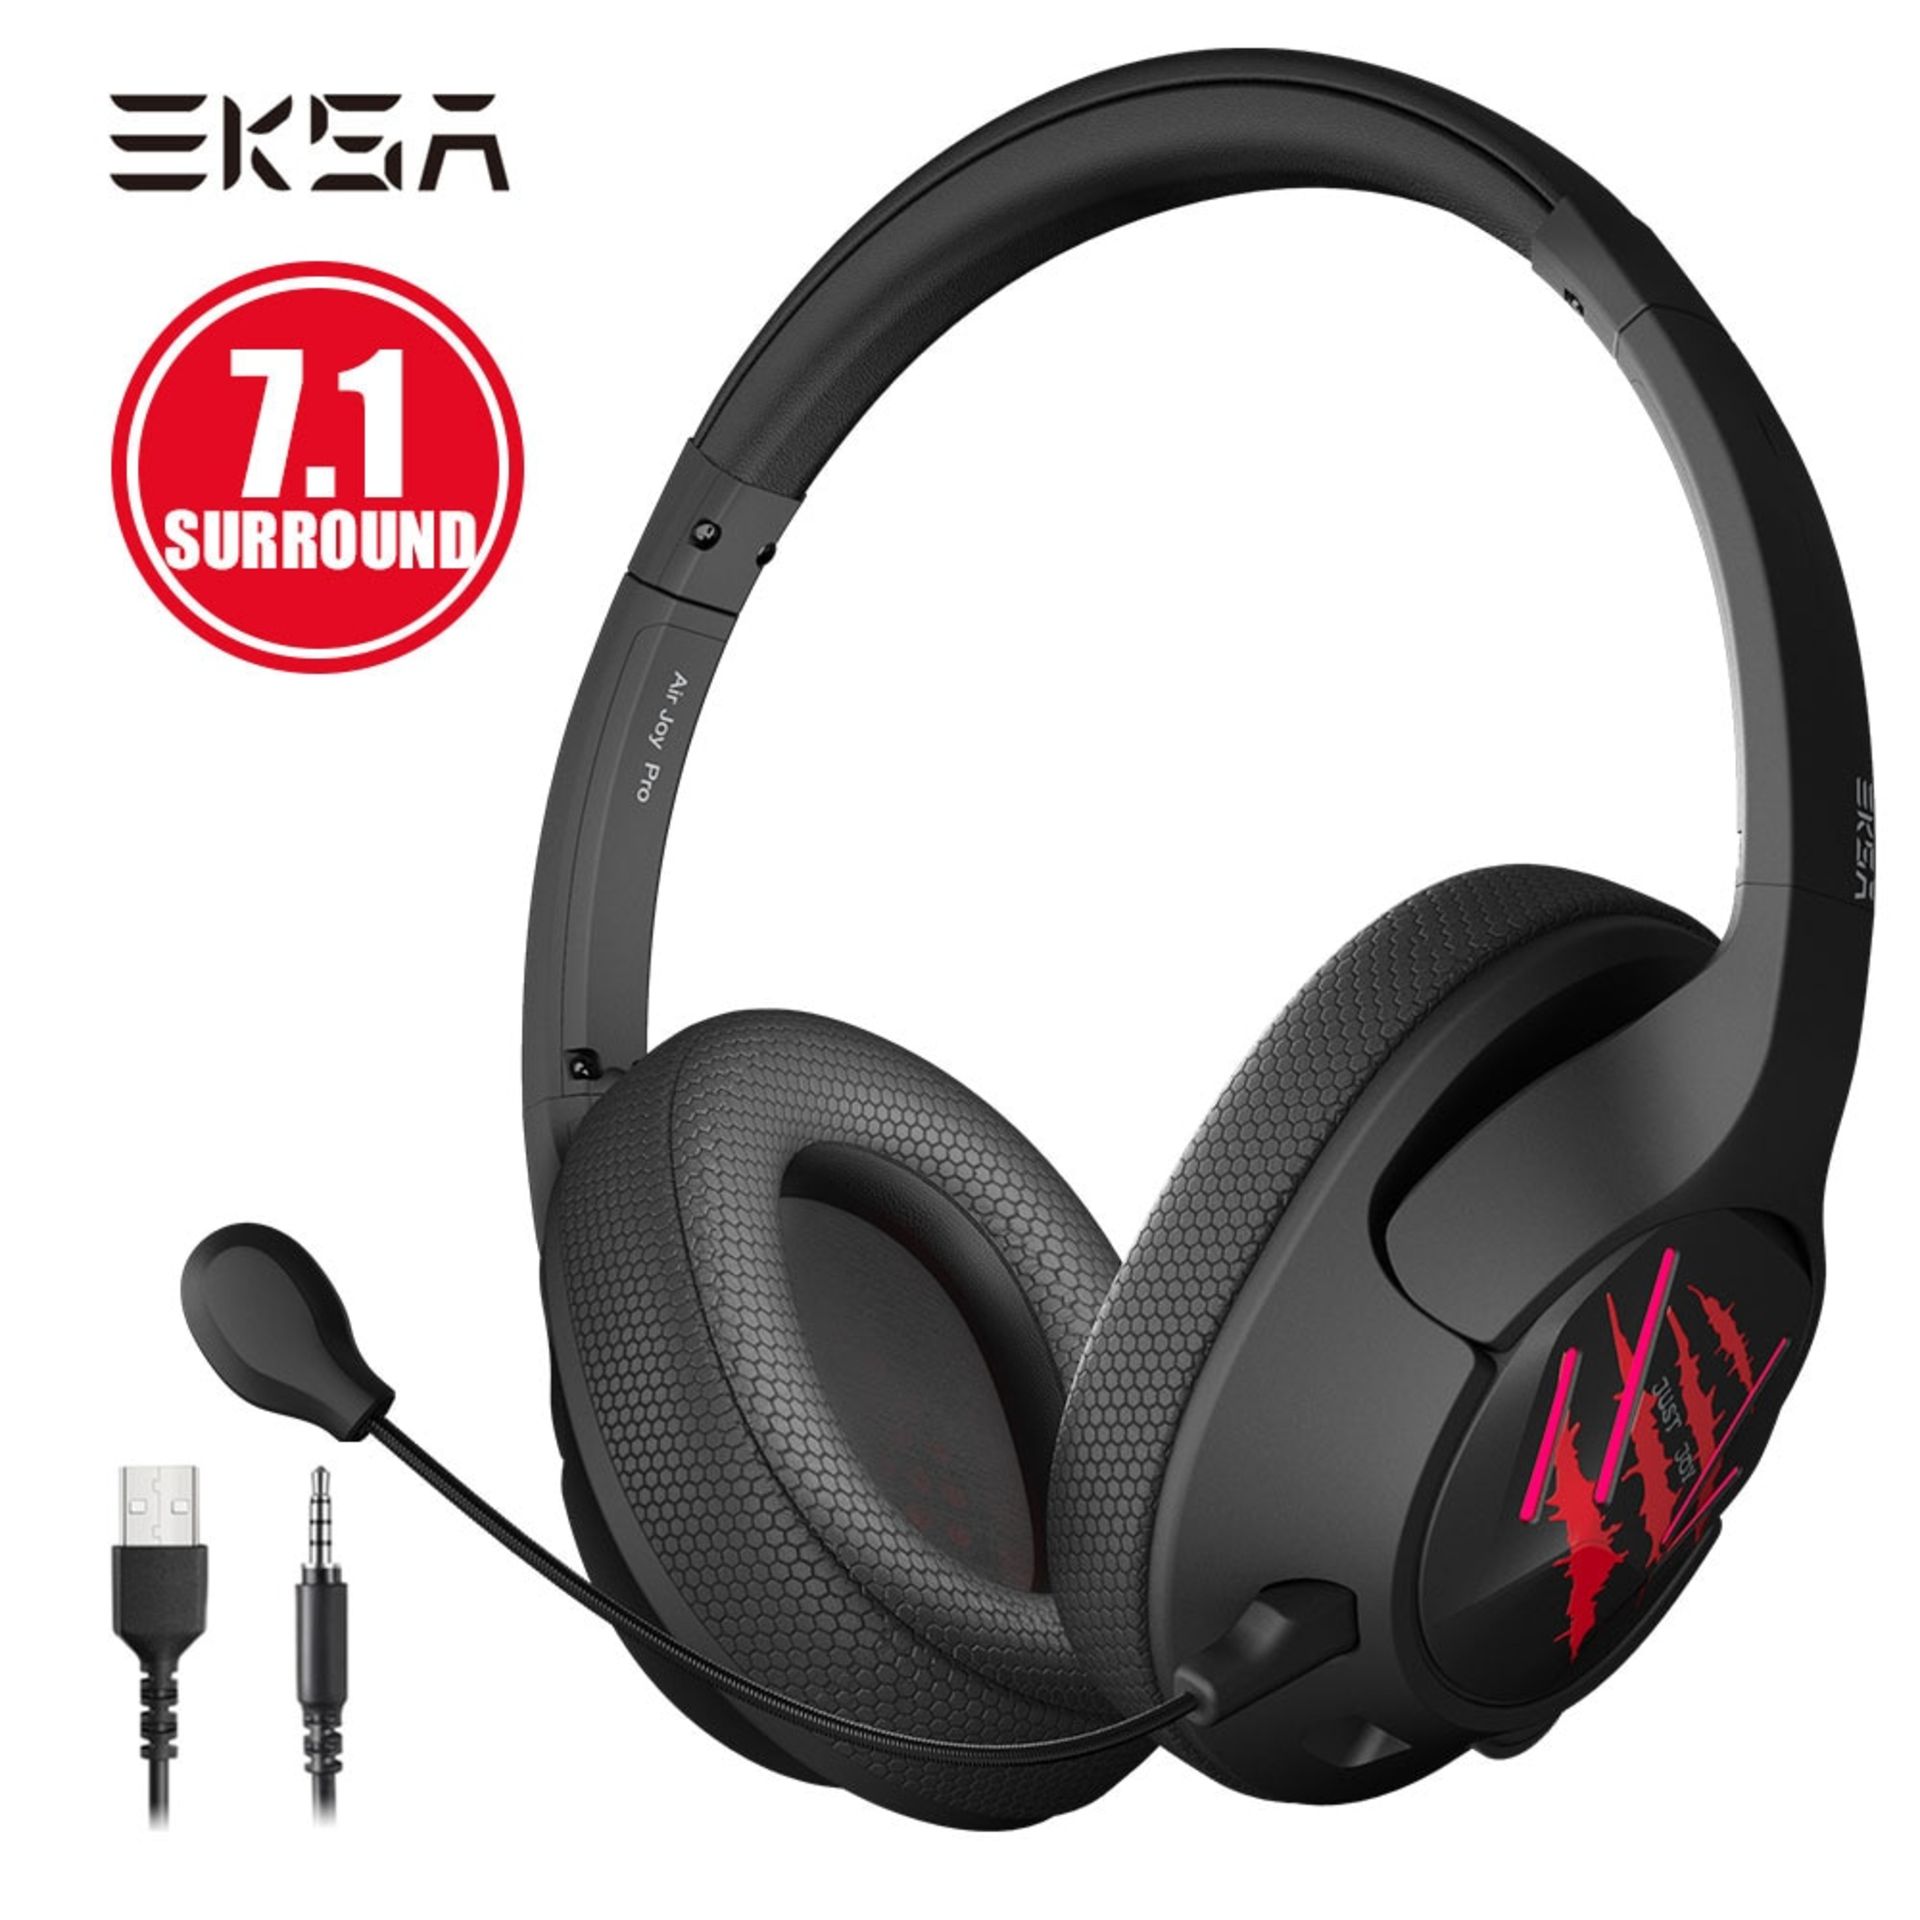 eksa e3 wired gaming headset gamer ultralight wired game headphones 3.5mm/usb headset 7.1 surround f - Image 5 of 7